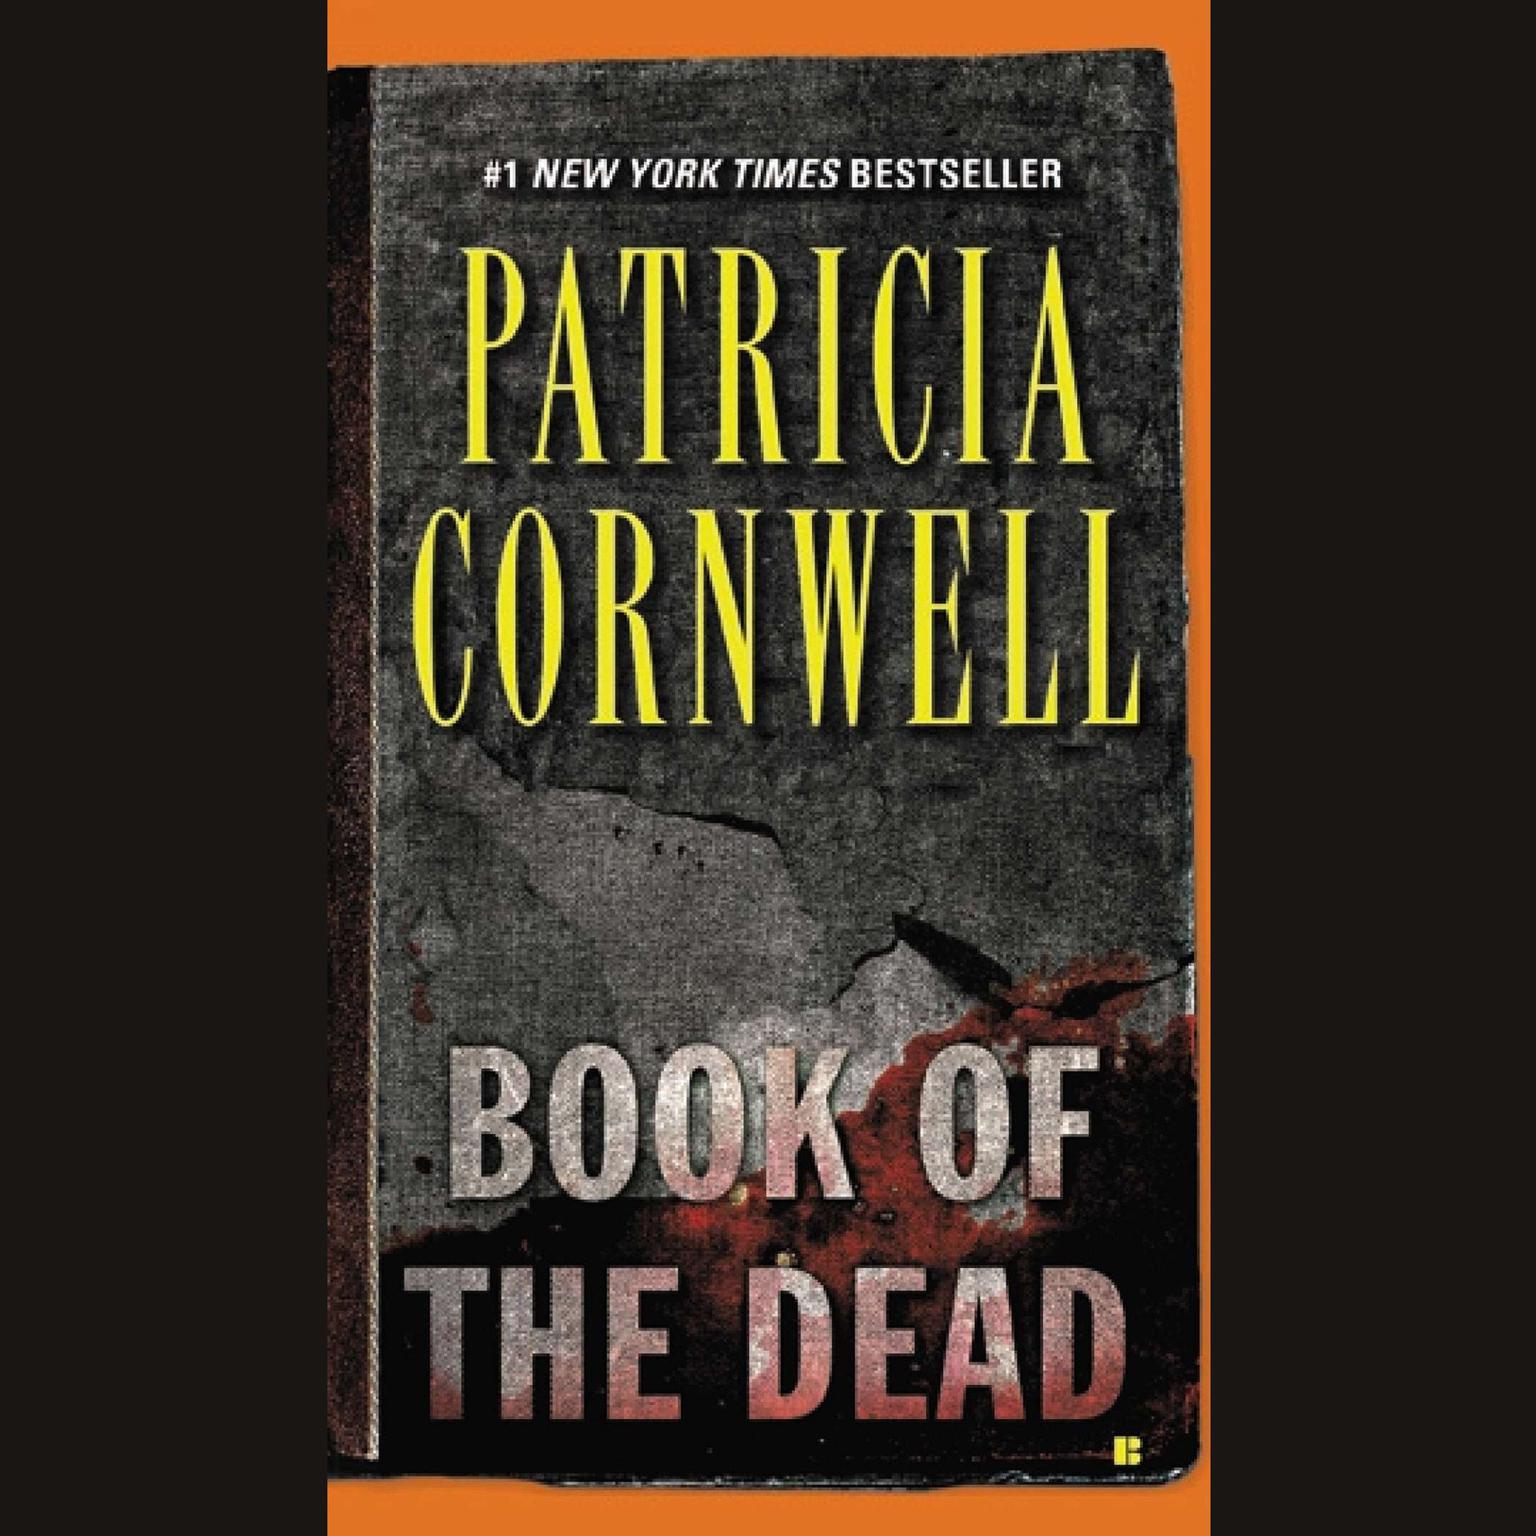 Book of the Dead (Abridged): Scarpetta (Book 15) Audiobook, by Patricia Cornwell